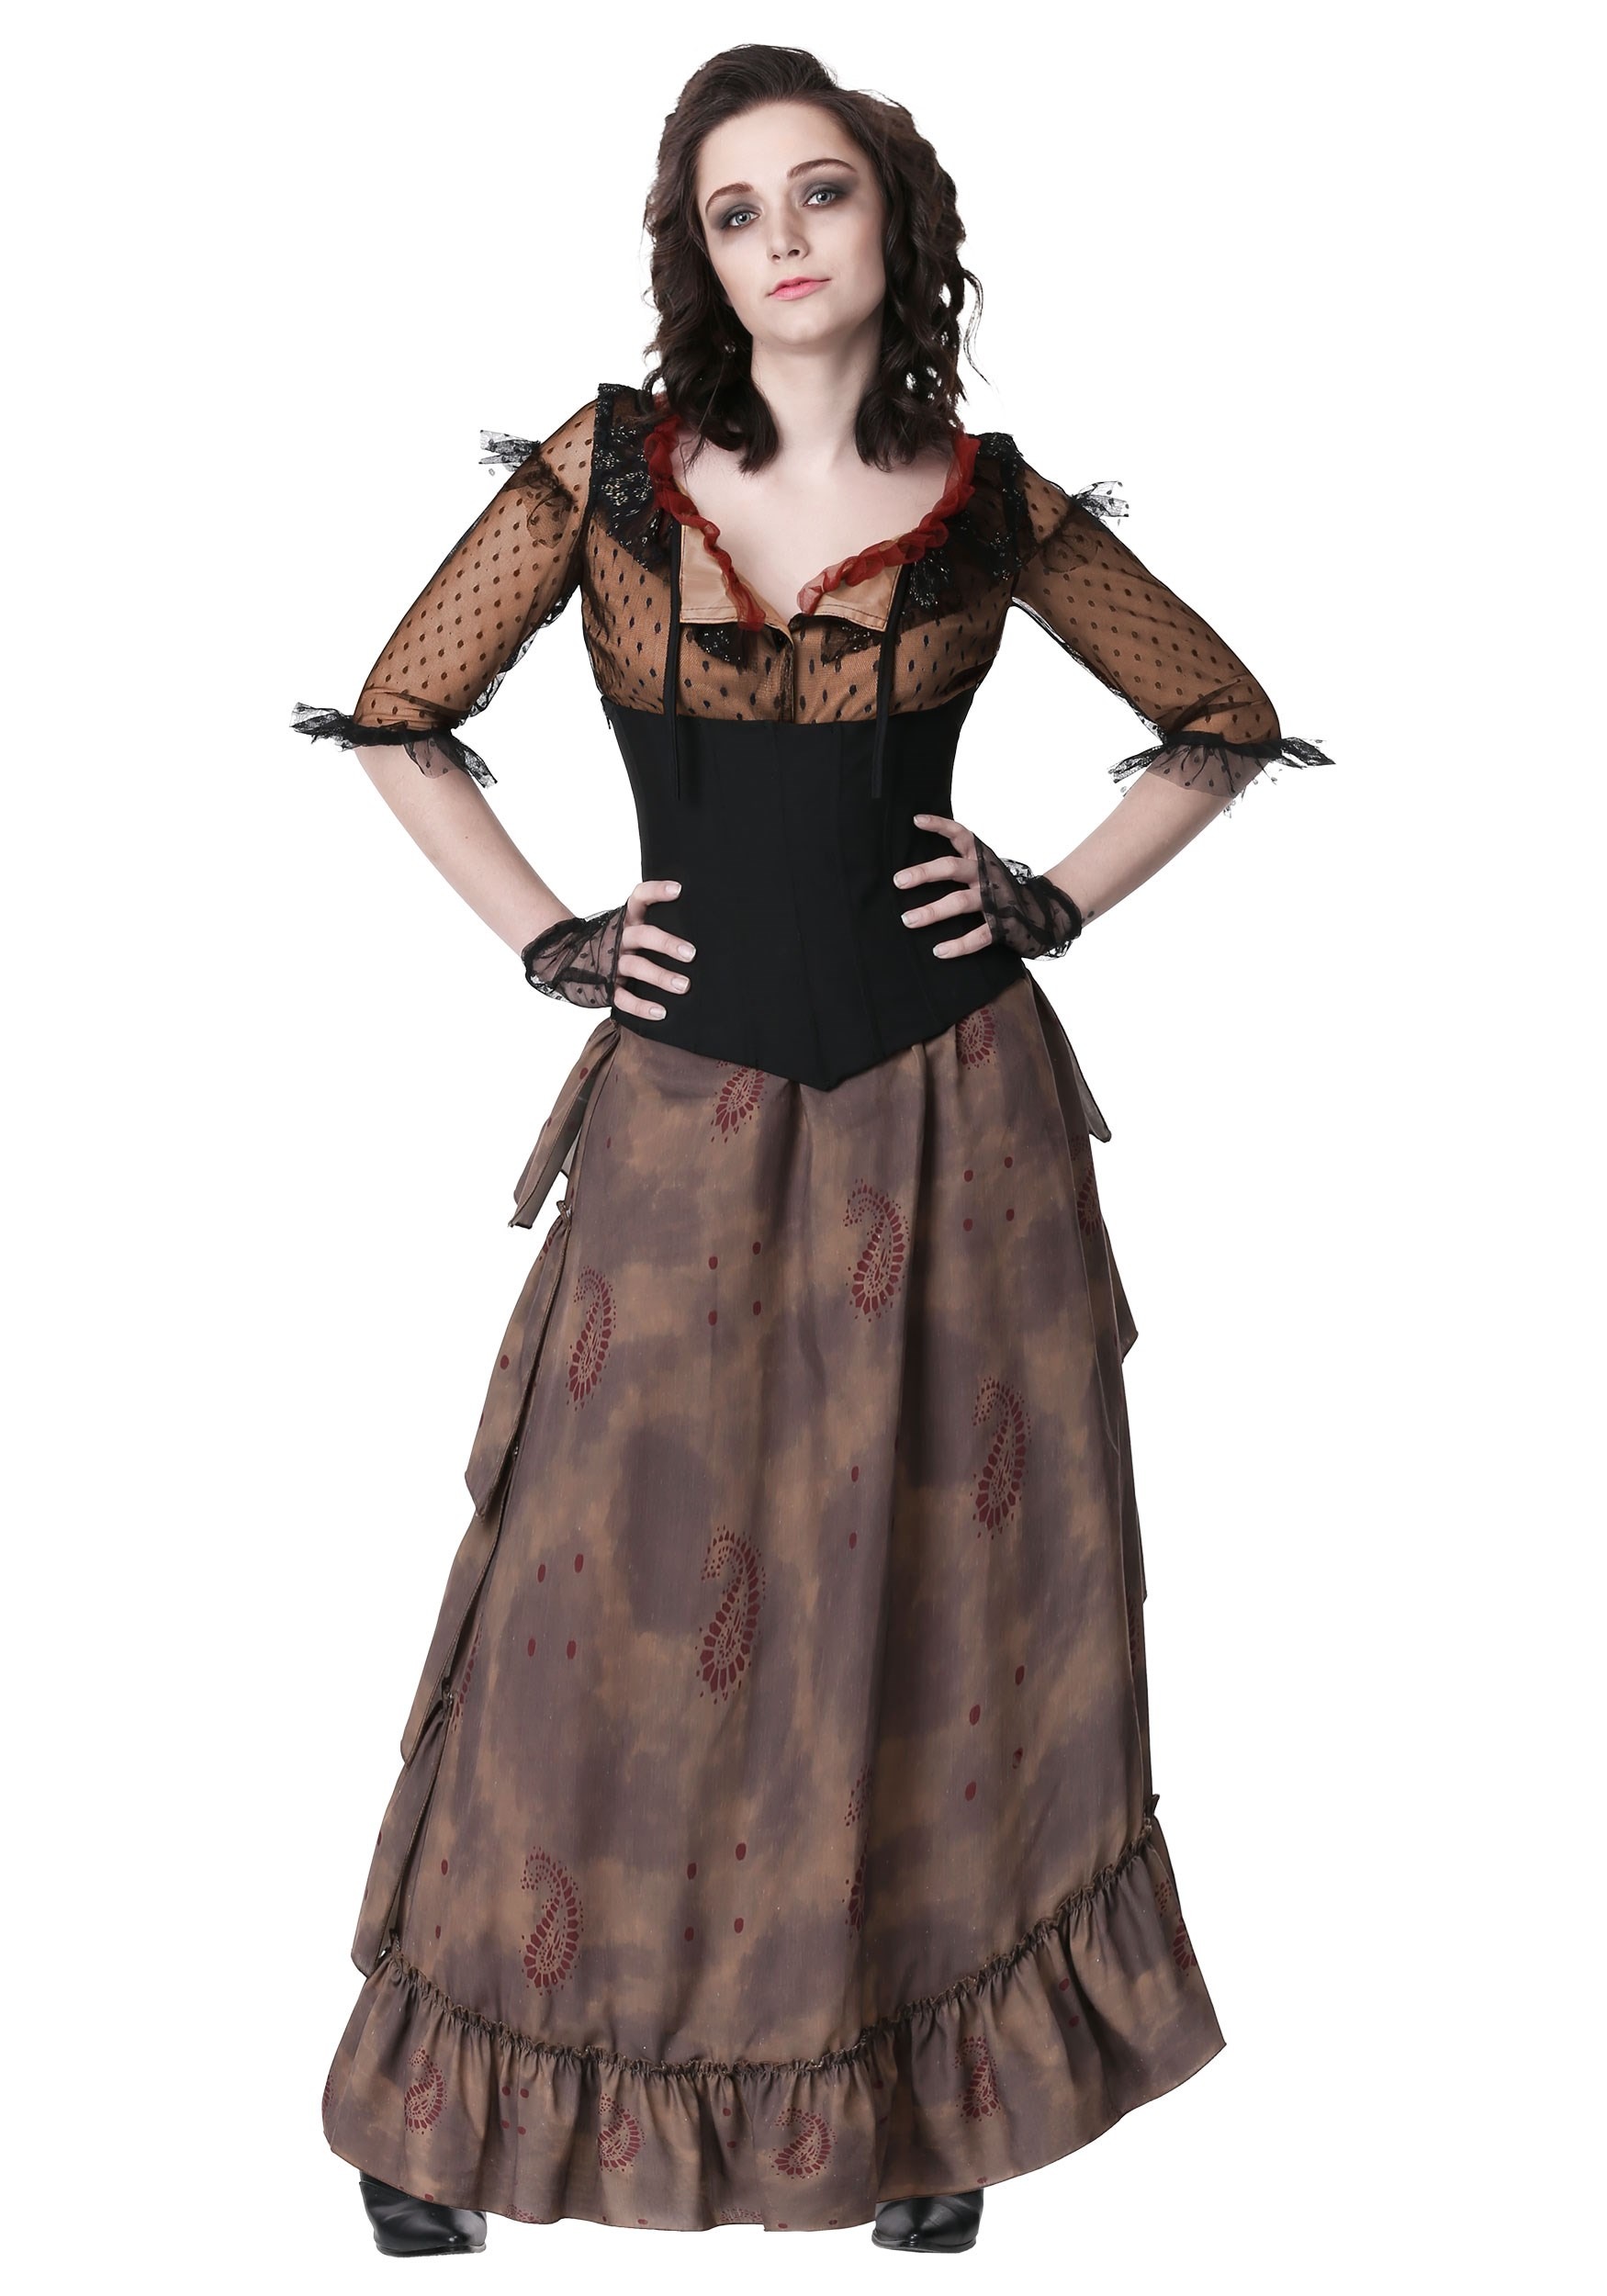 Photos - Fancy Dress FUN Costumes Plus Size Sweeney Todd's Mrs. Lovett Costume Black/Brown